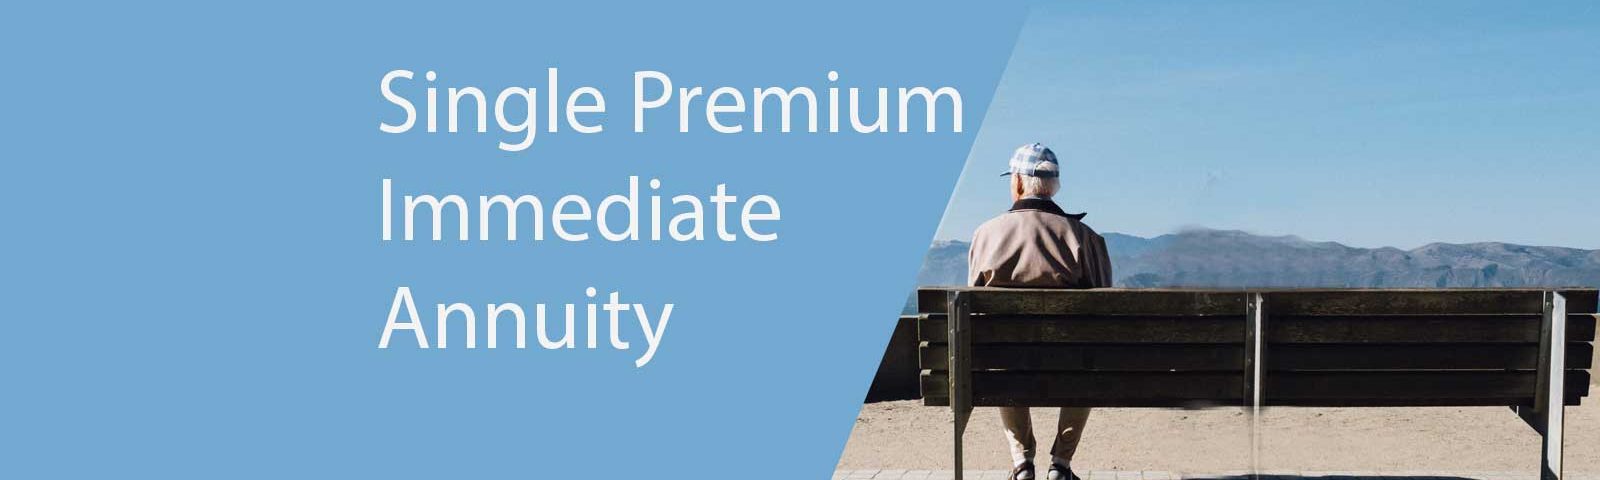 single premium immediate annuity